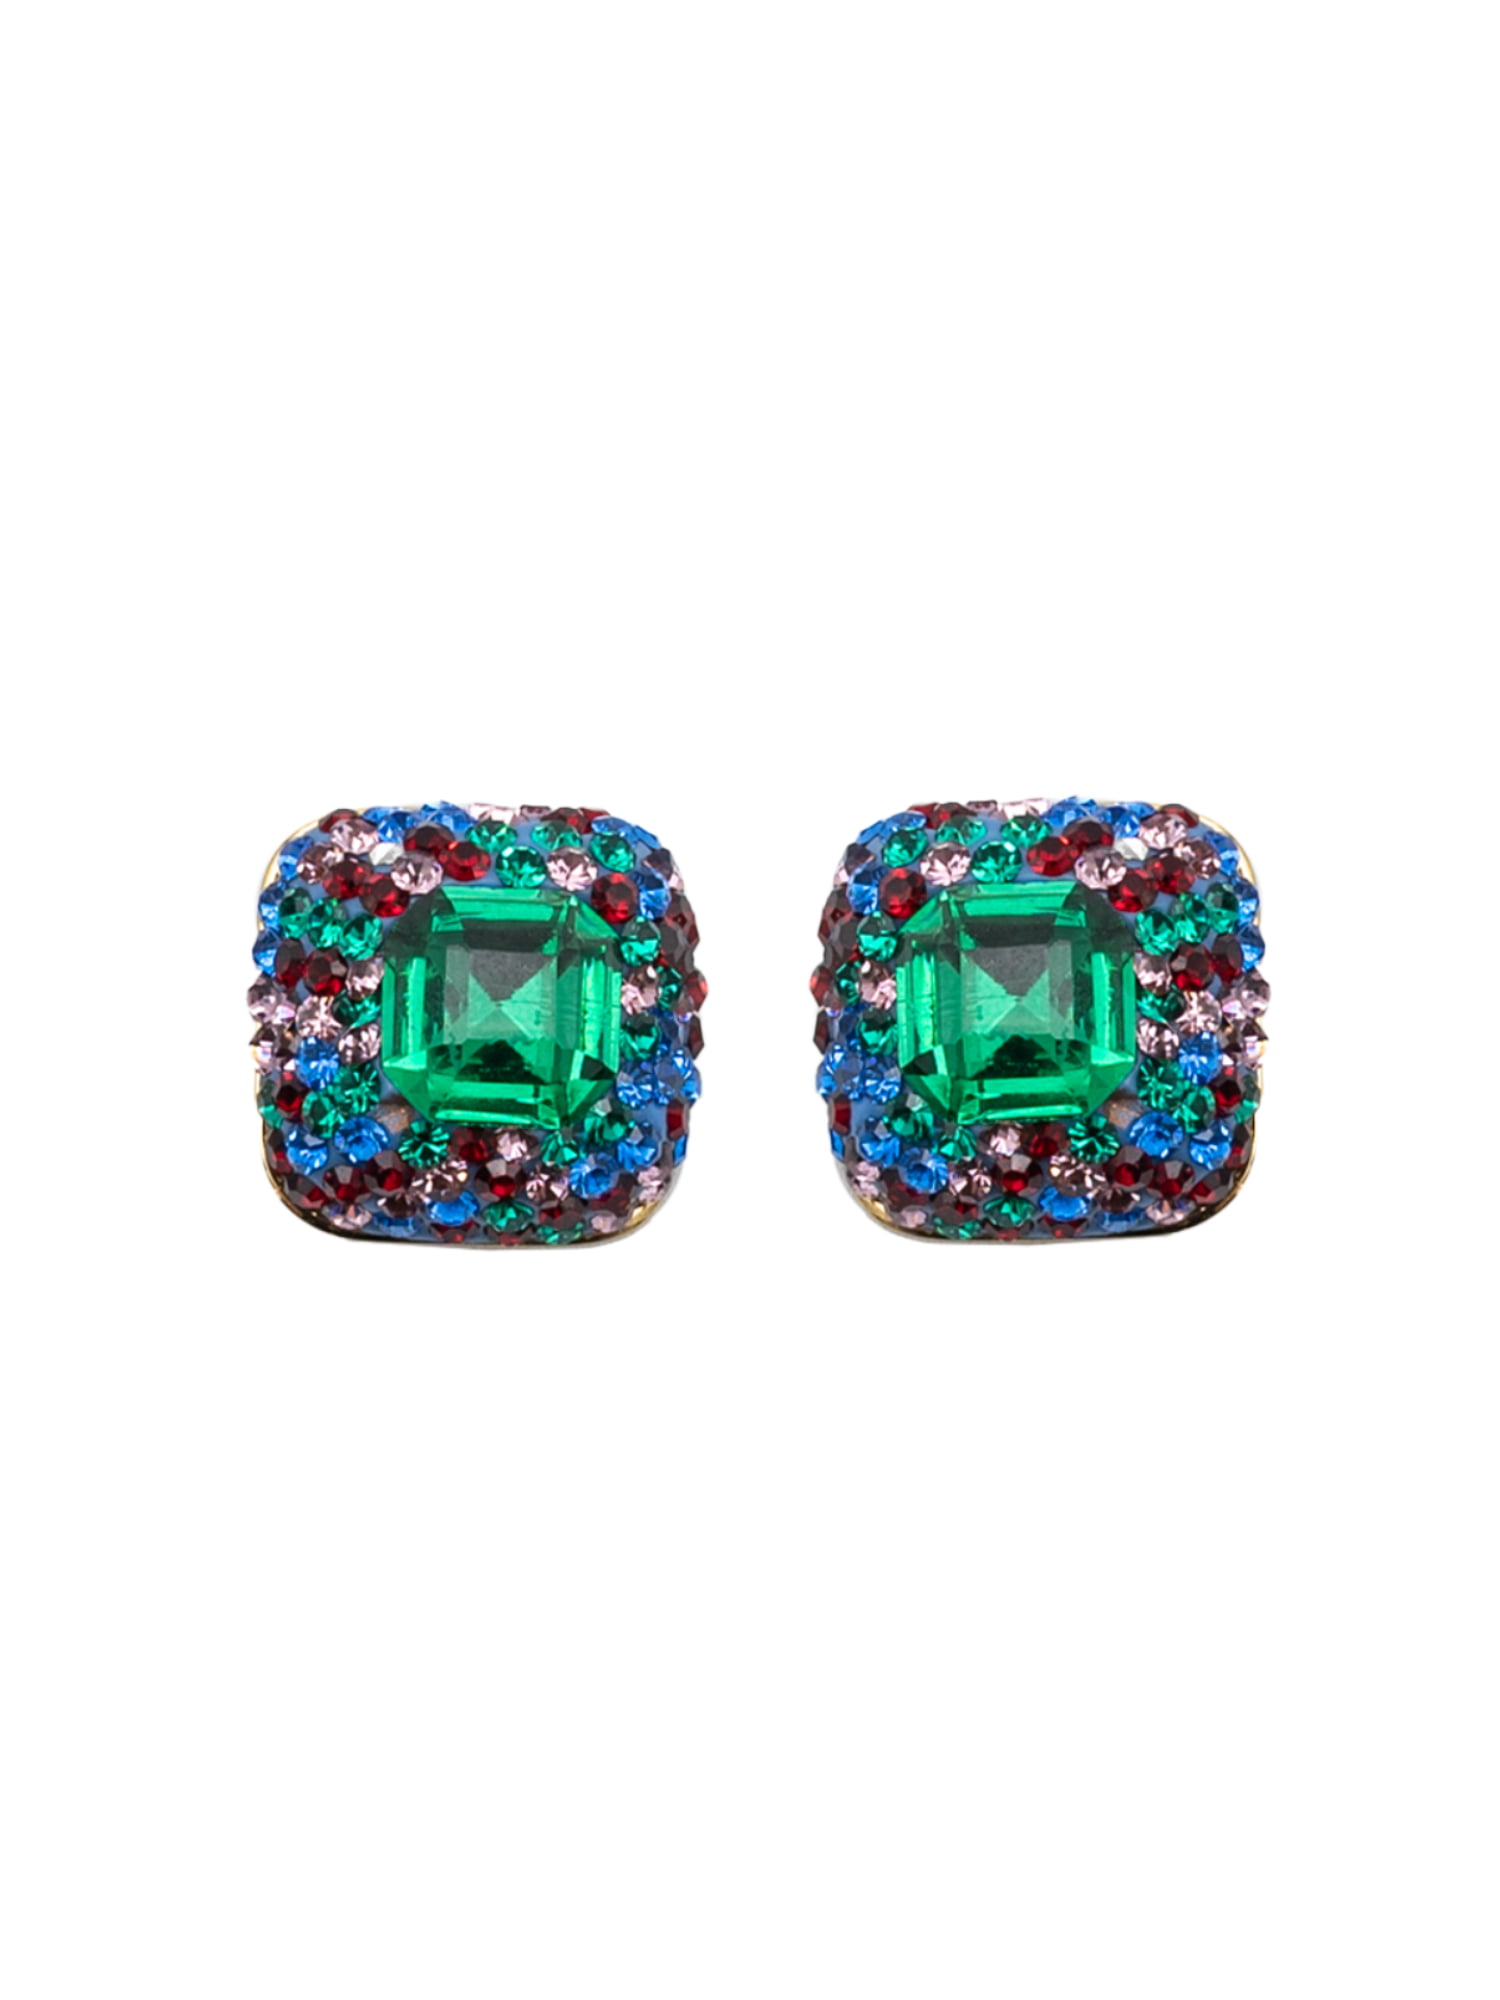 Amazoncom kate spade new york Emerald Stud Earrings Clothing Shoes   Jewelry